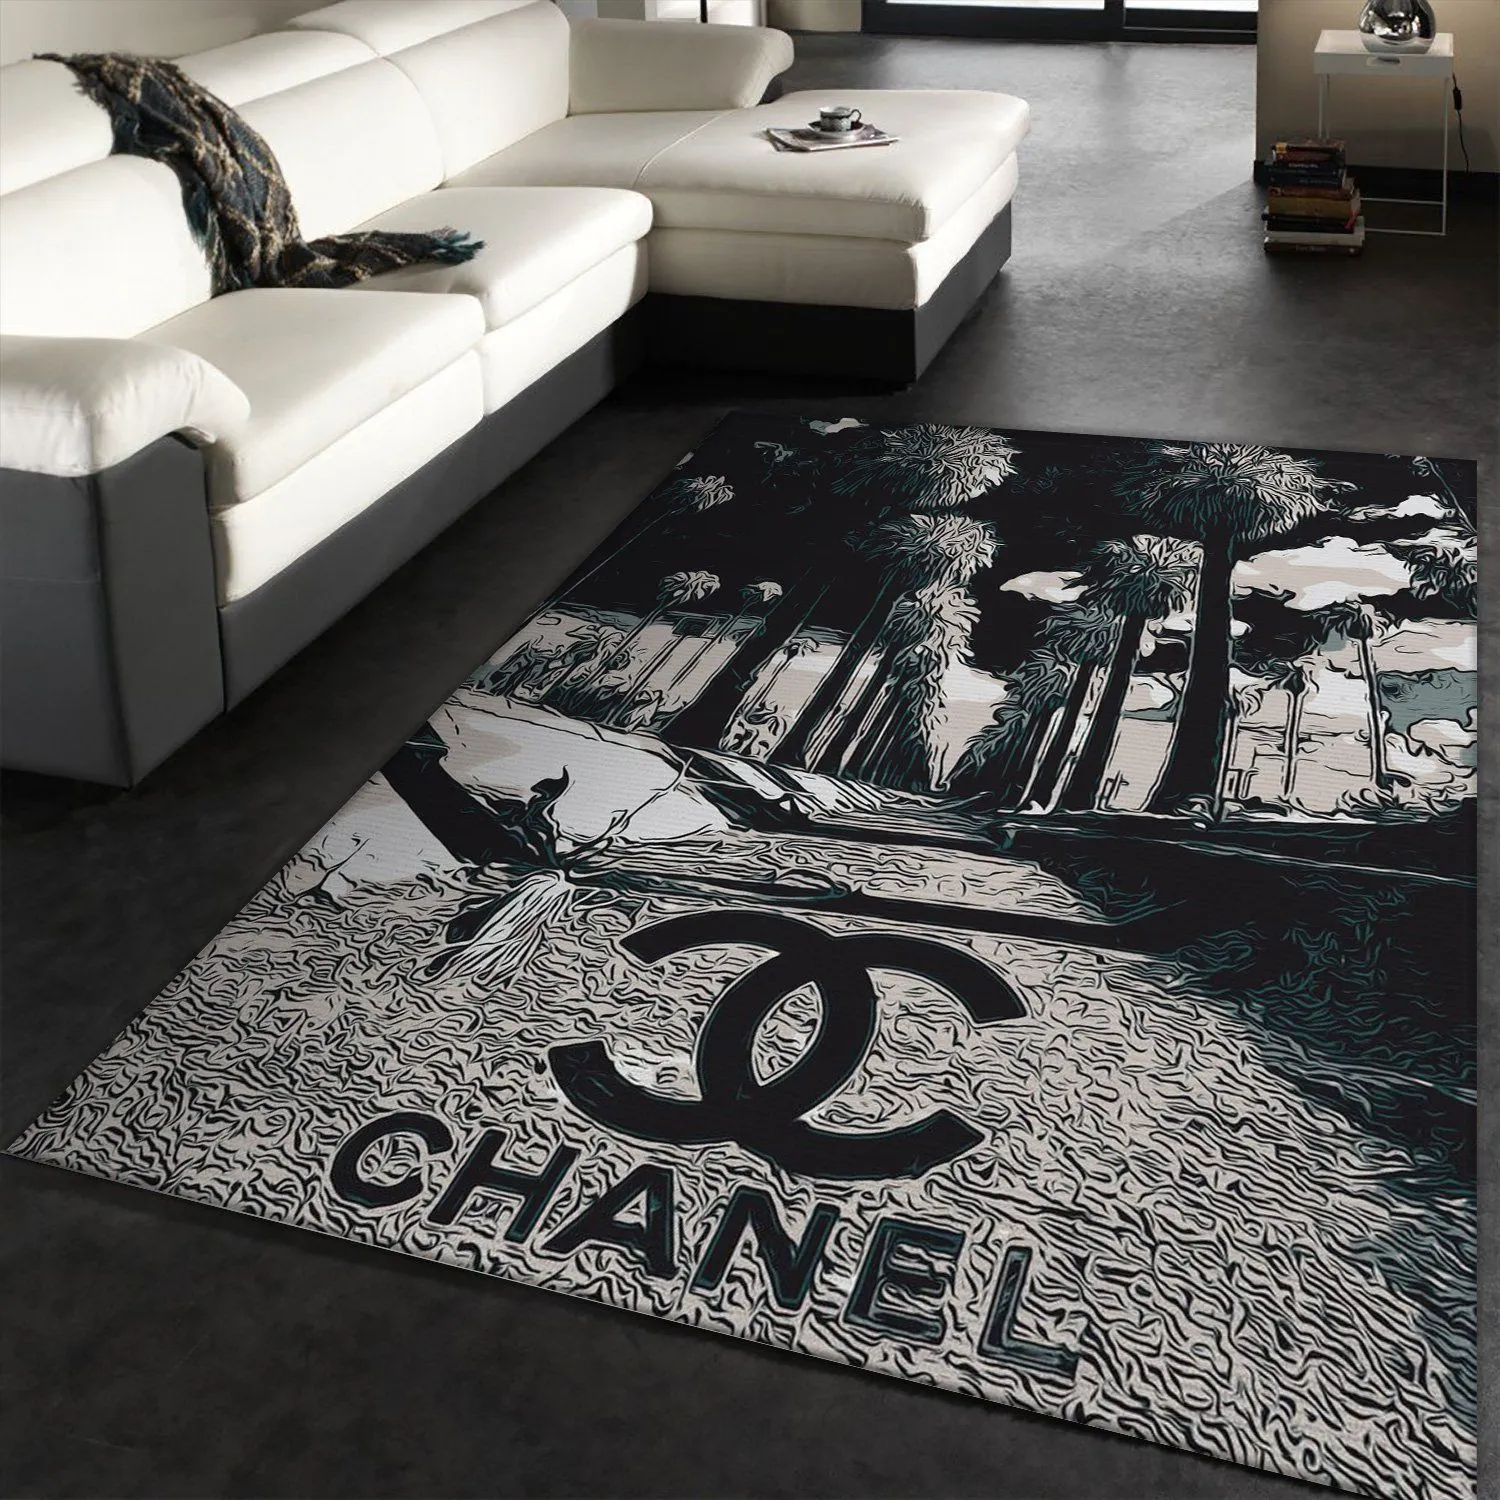 Chanel Rectangle Rug Home Decor Luxury Fashion Brand Door Mat Area Carpet